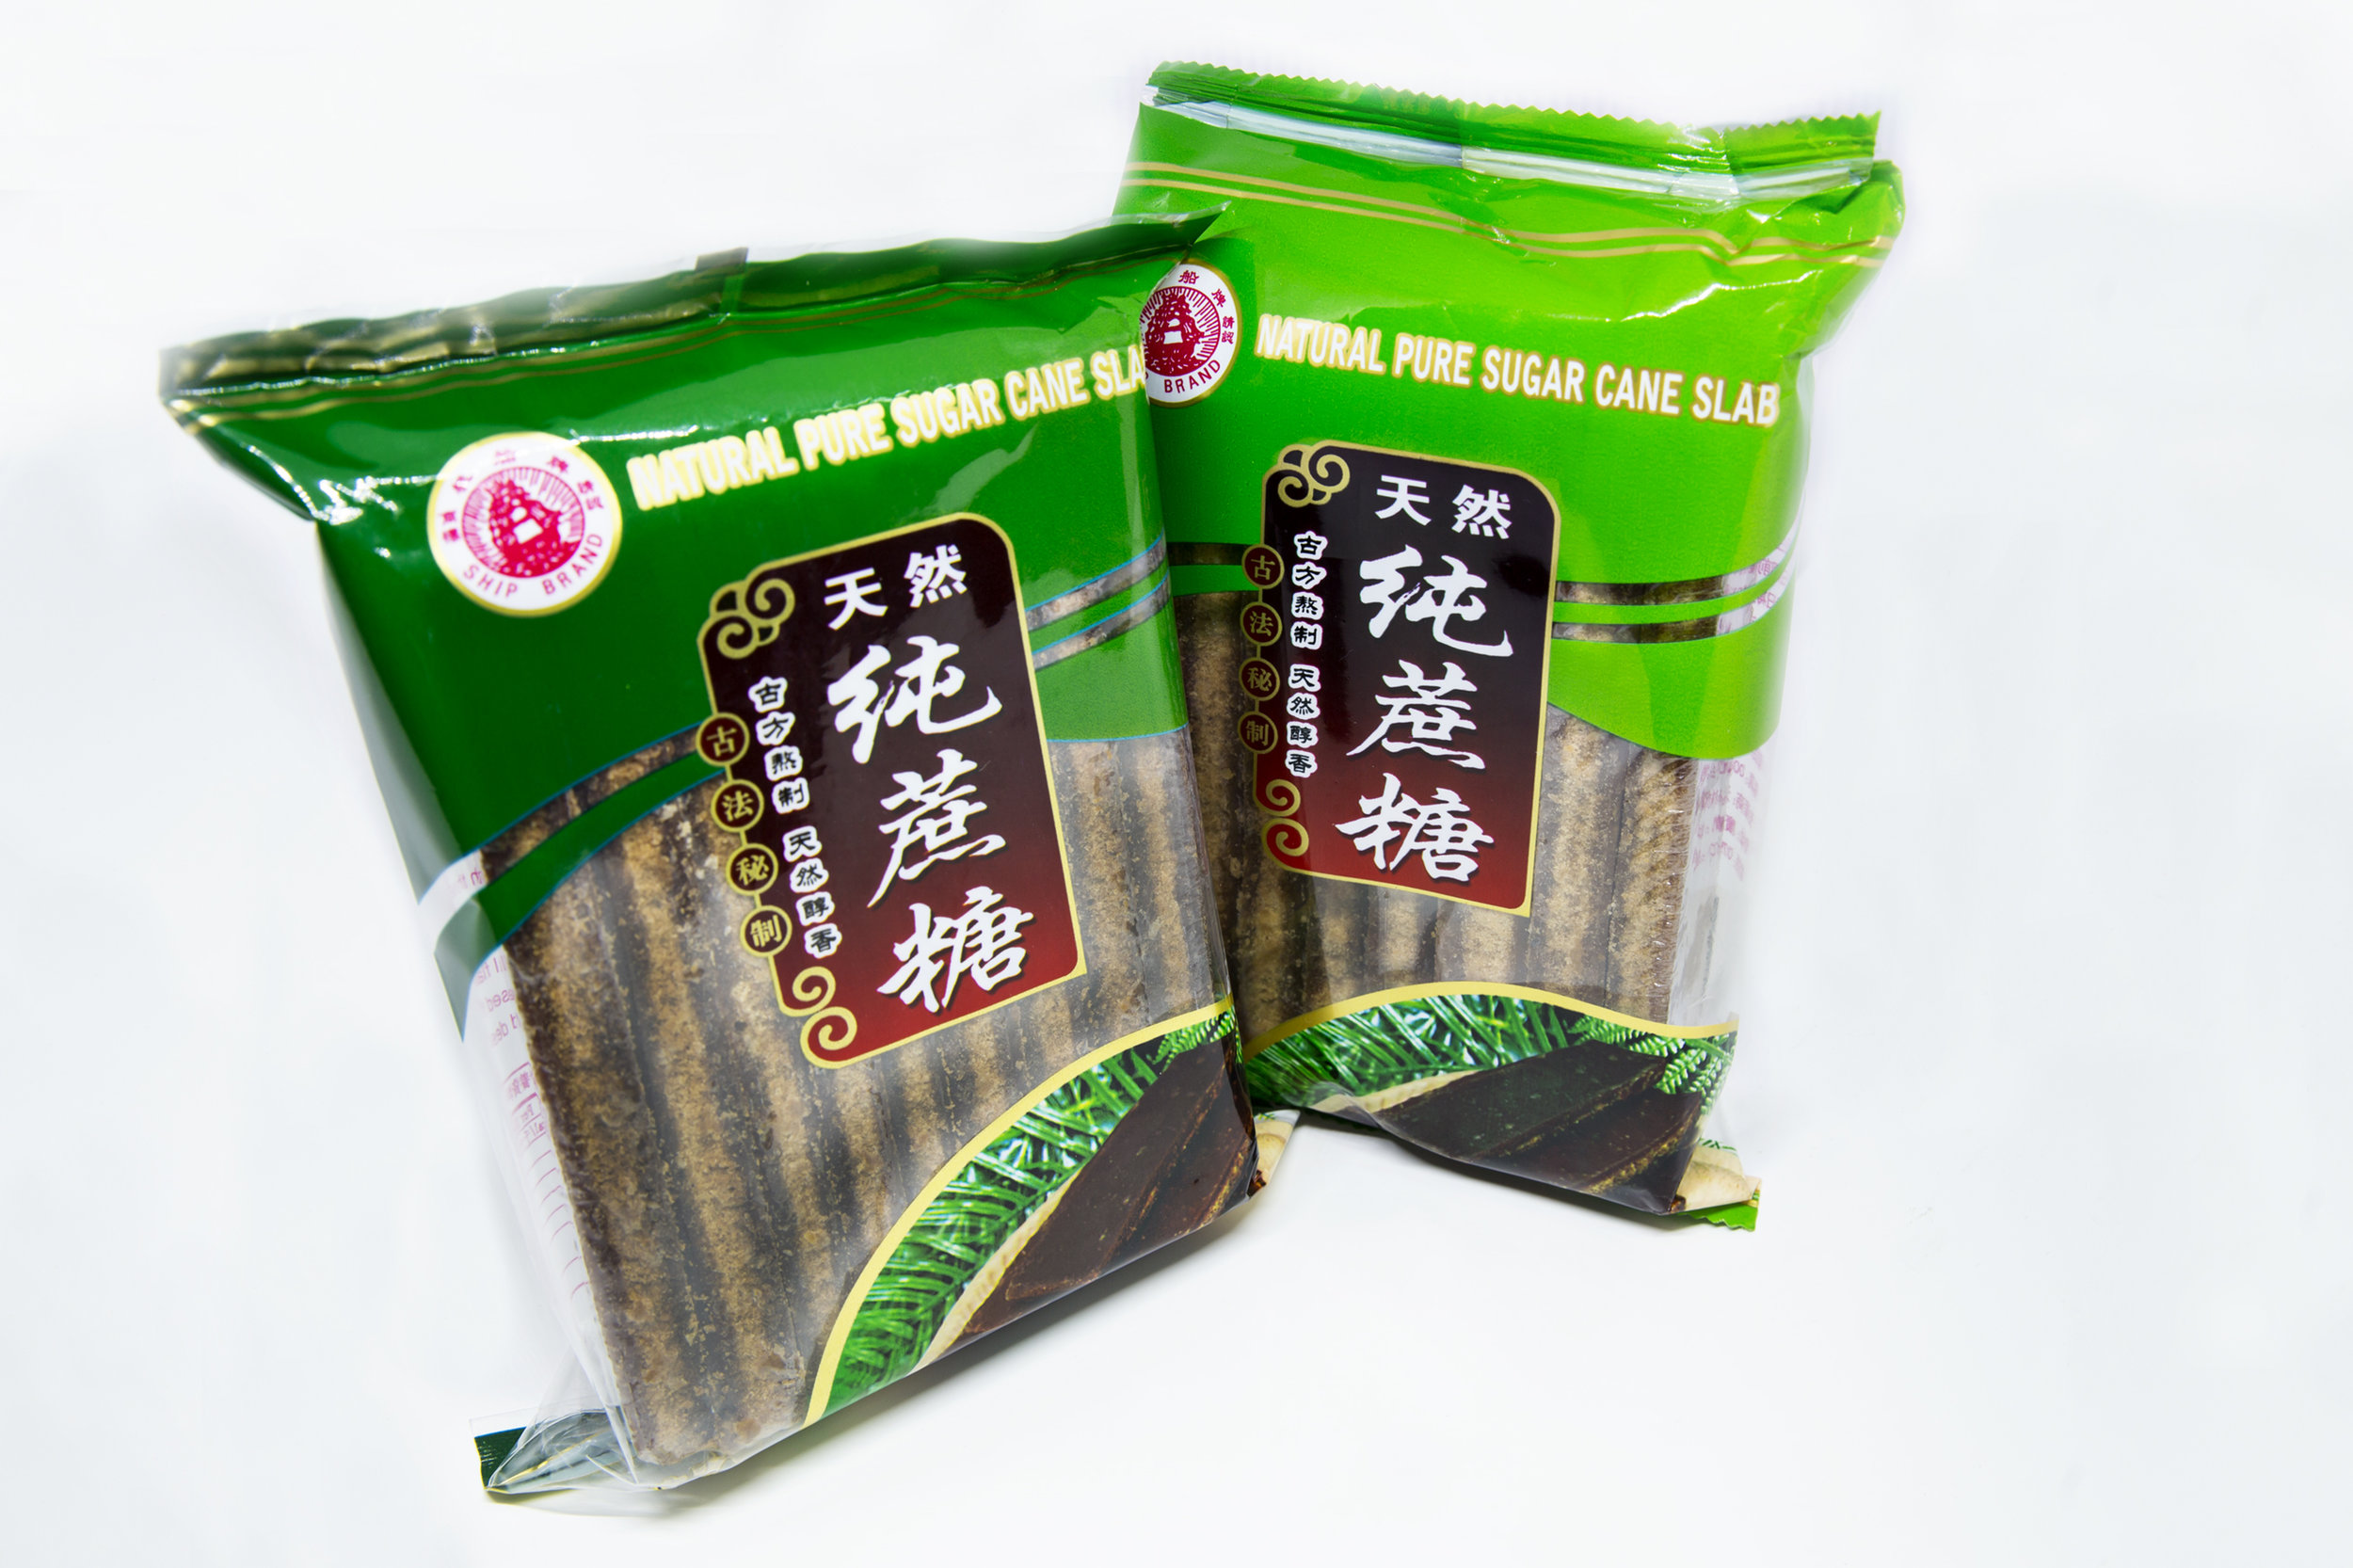 Natural Pure Sugar Cane Slab packaging 2.jpg